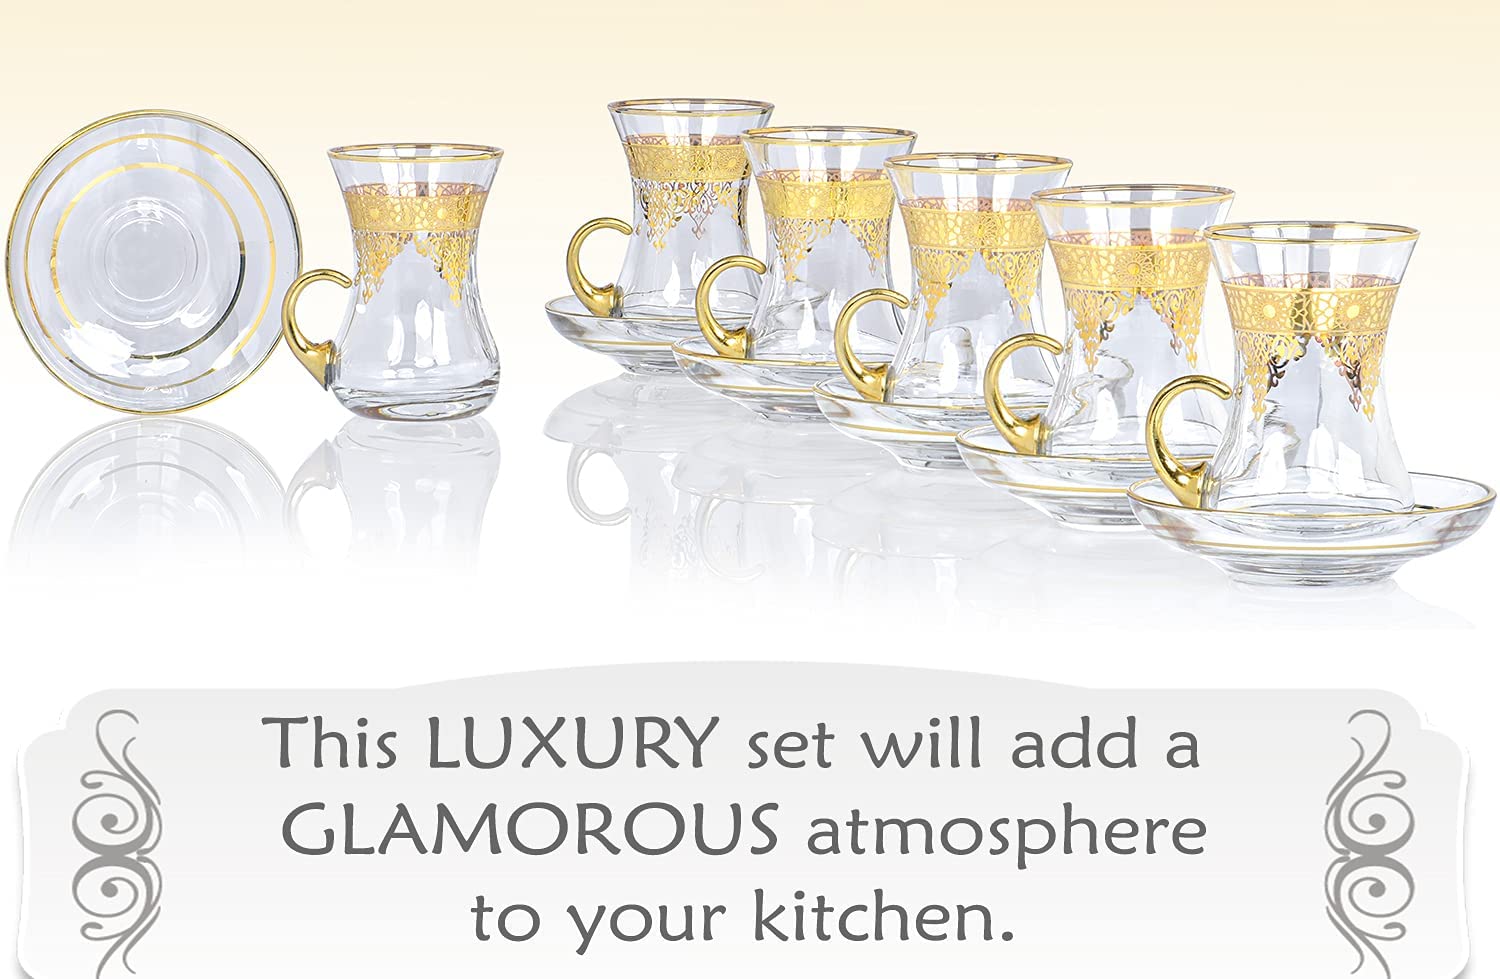 Vissmarta Vintage Turkish Tea Glasses Cups Saucers Set of 6 for Women  Glassware Drinking Party Teapo…See more Vissmarta Vintage Turkish Tea  Glasses